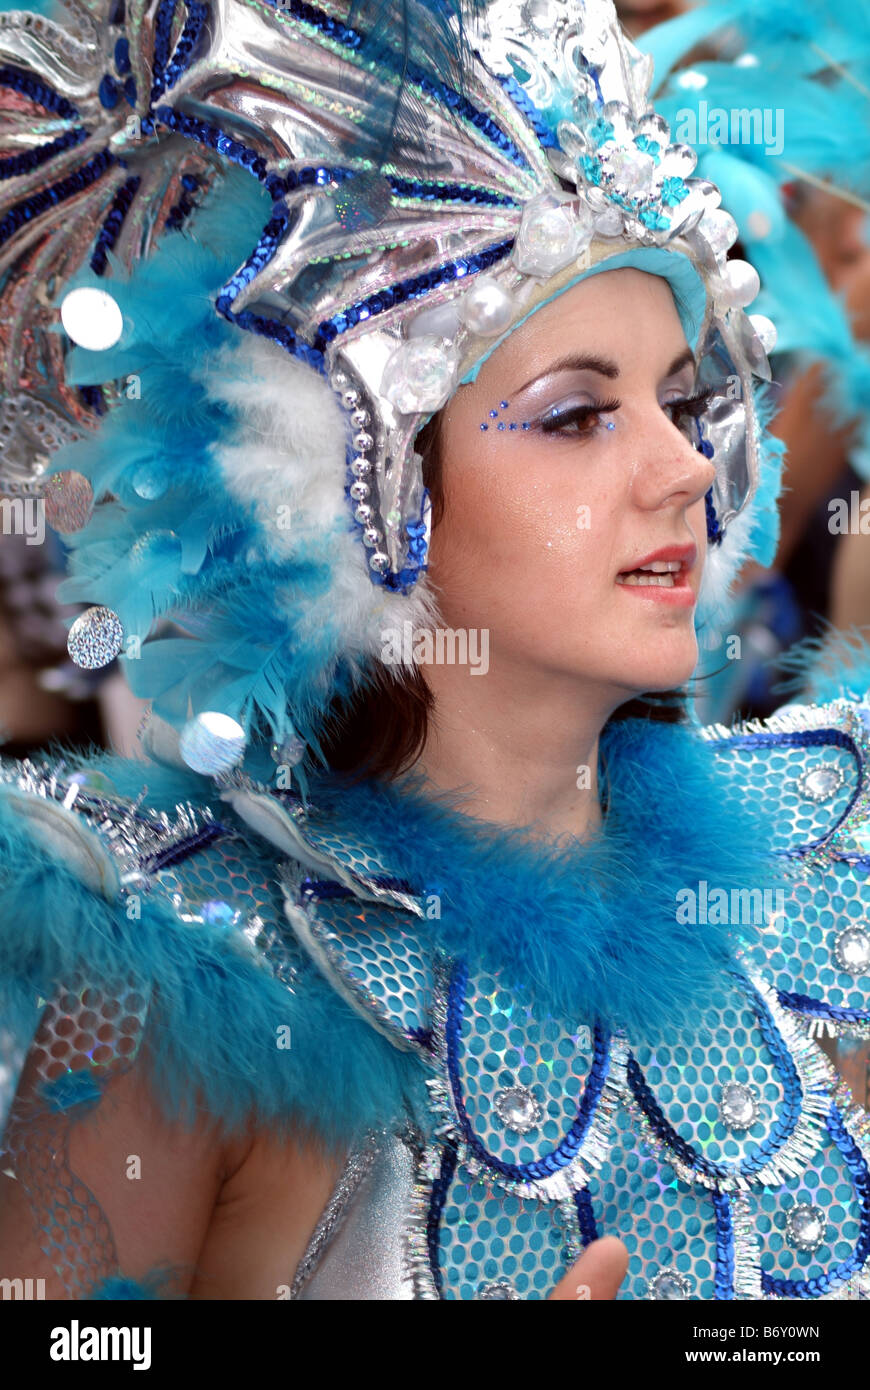 female woman brazilian ethnic south america dancer smiling notting hill carnival festival street theatre london england uk Stock Photo